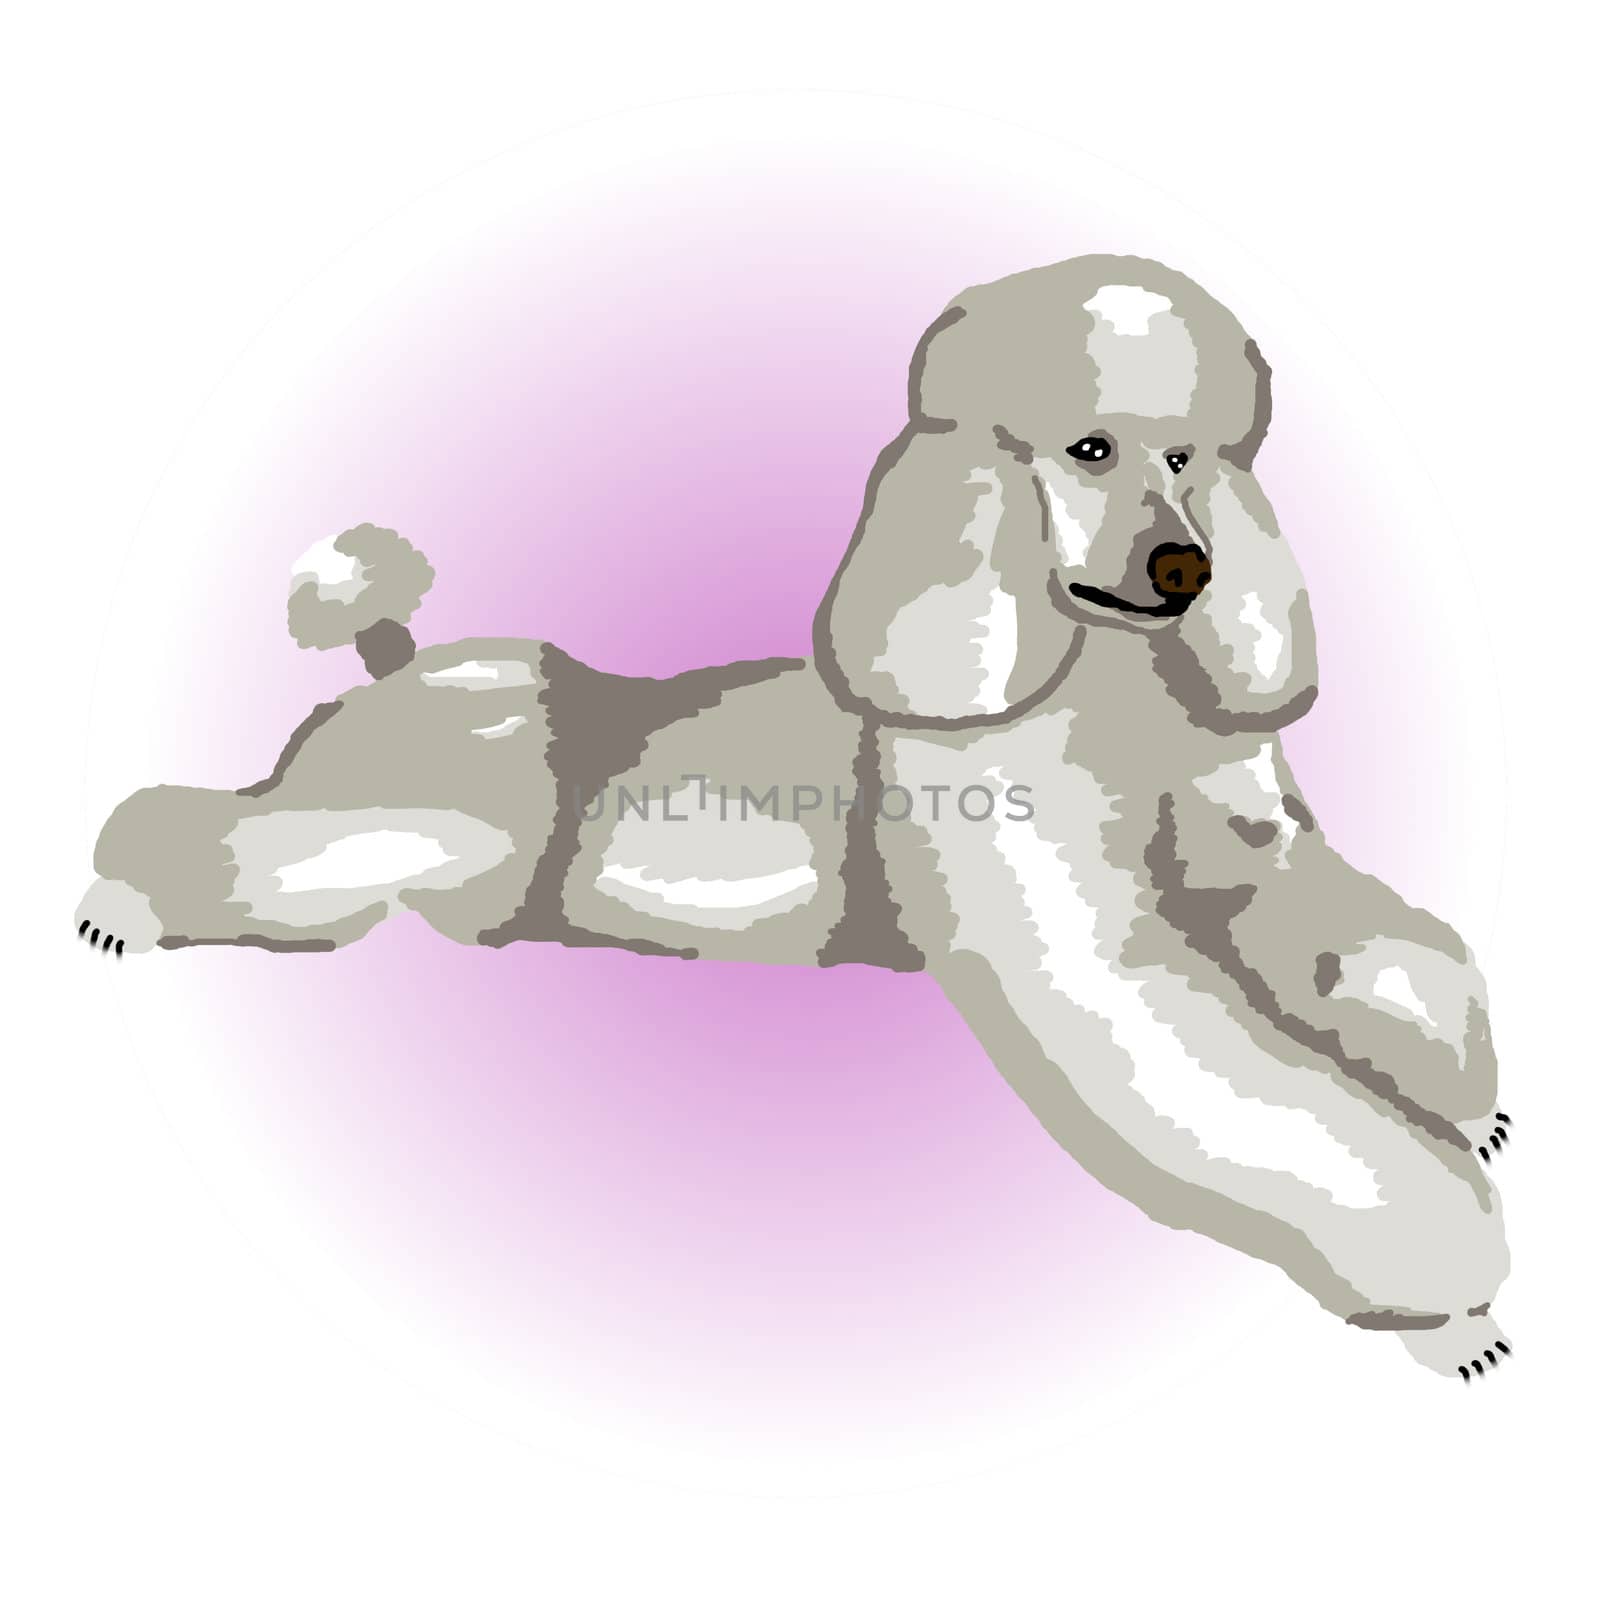 Silver Poodle Lying Down by karensuki